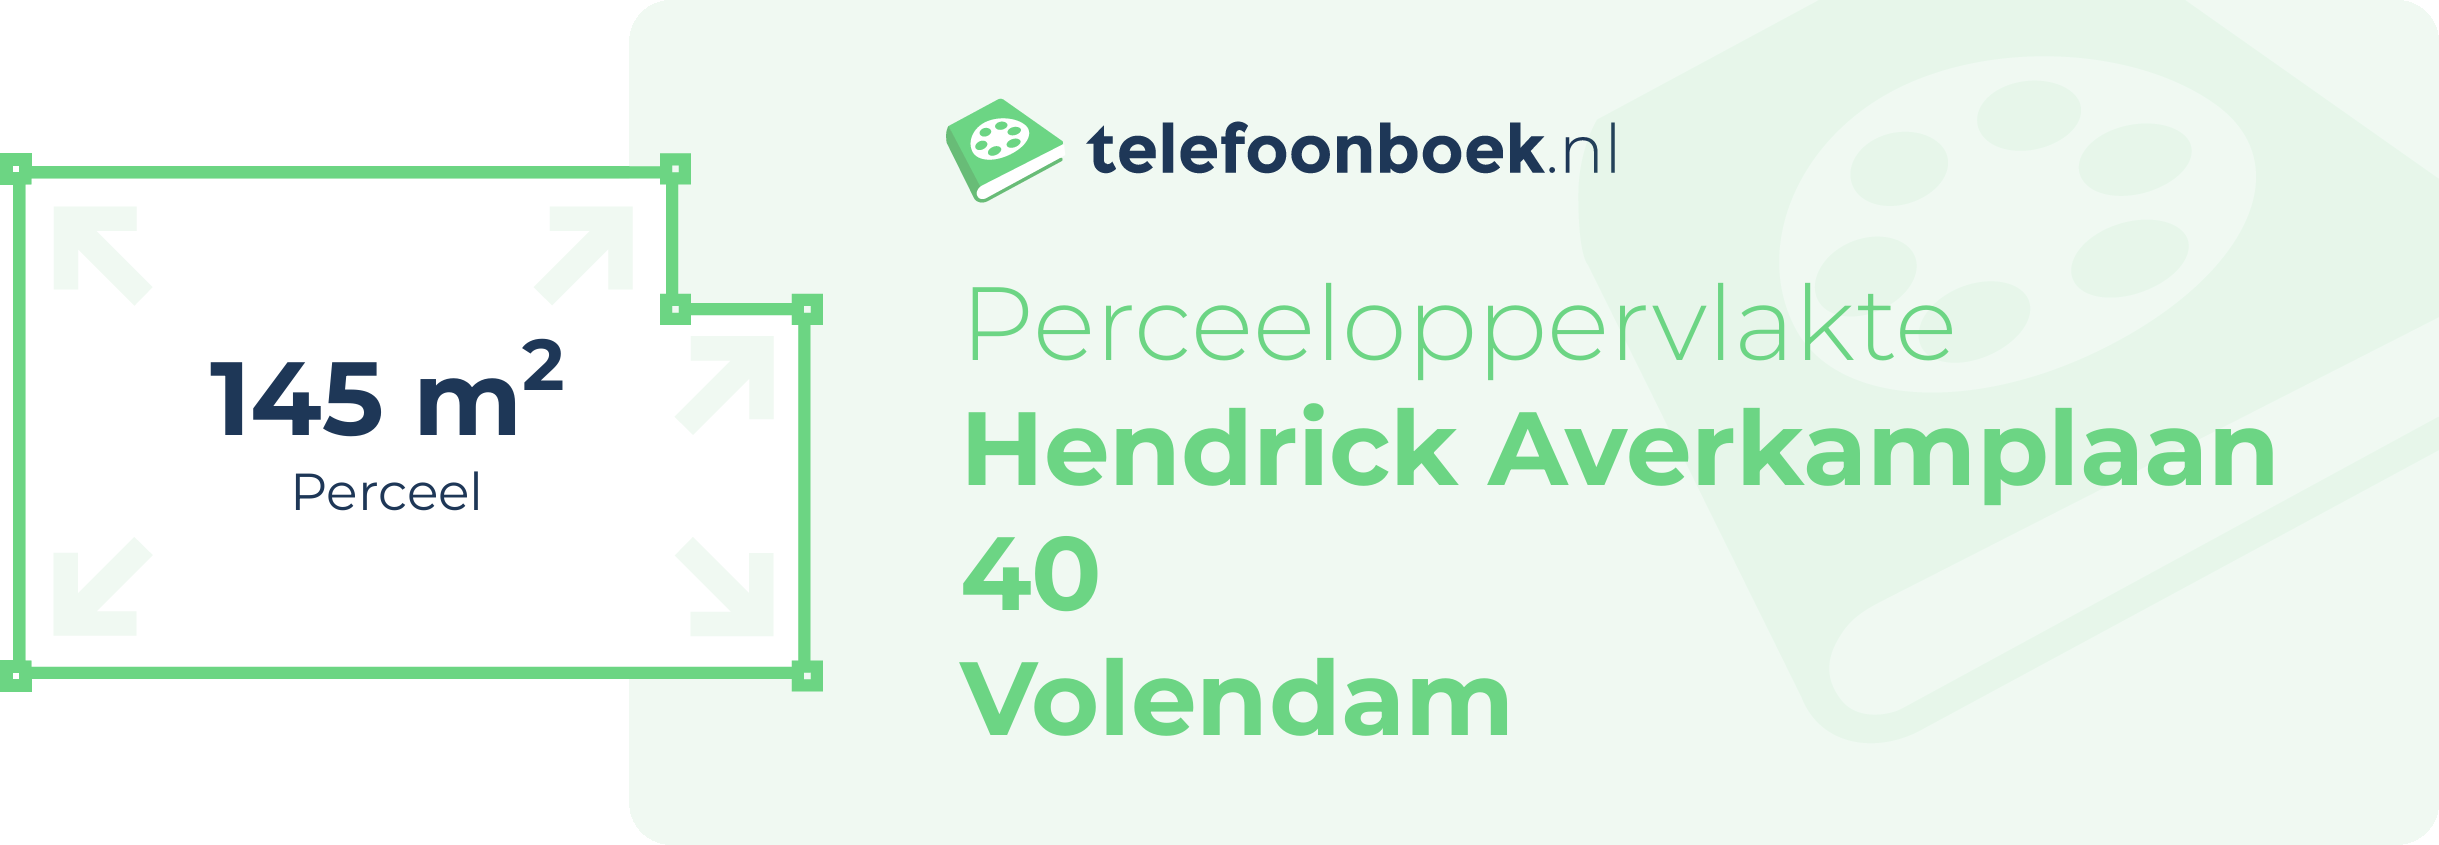 Perceeloppervlakte Hendrick Averkamplaan 40 Volendam